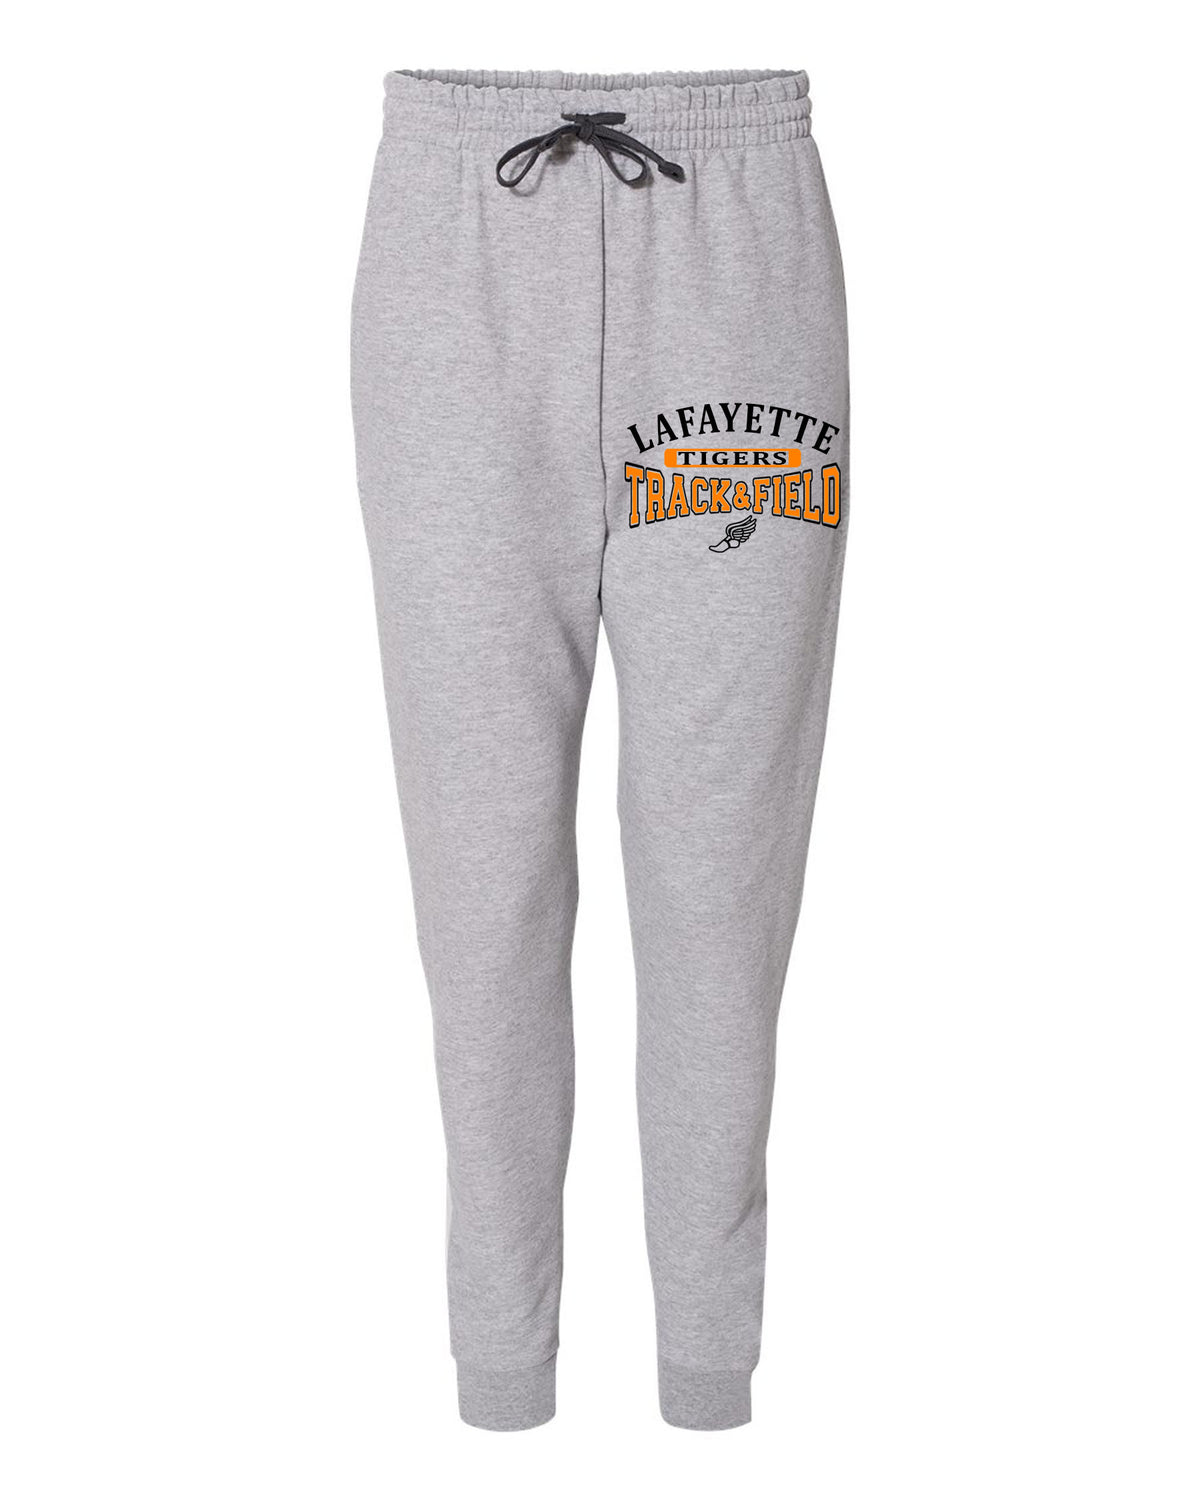 Lafayette Track Sweatpants Design 2